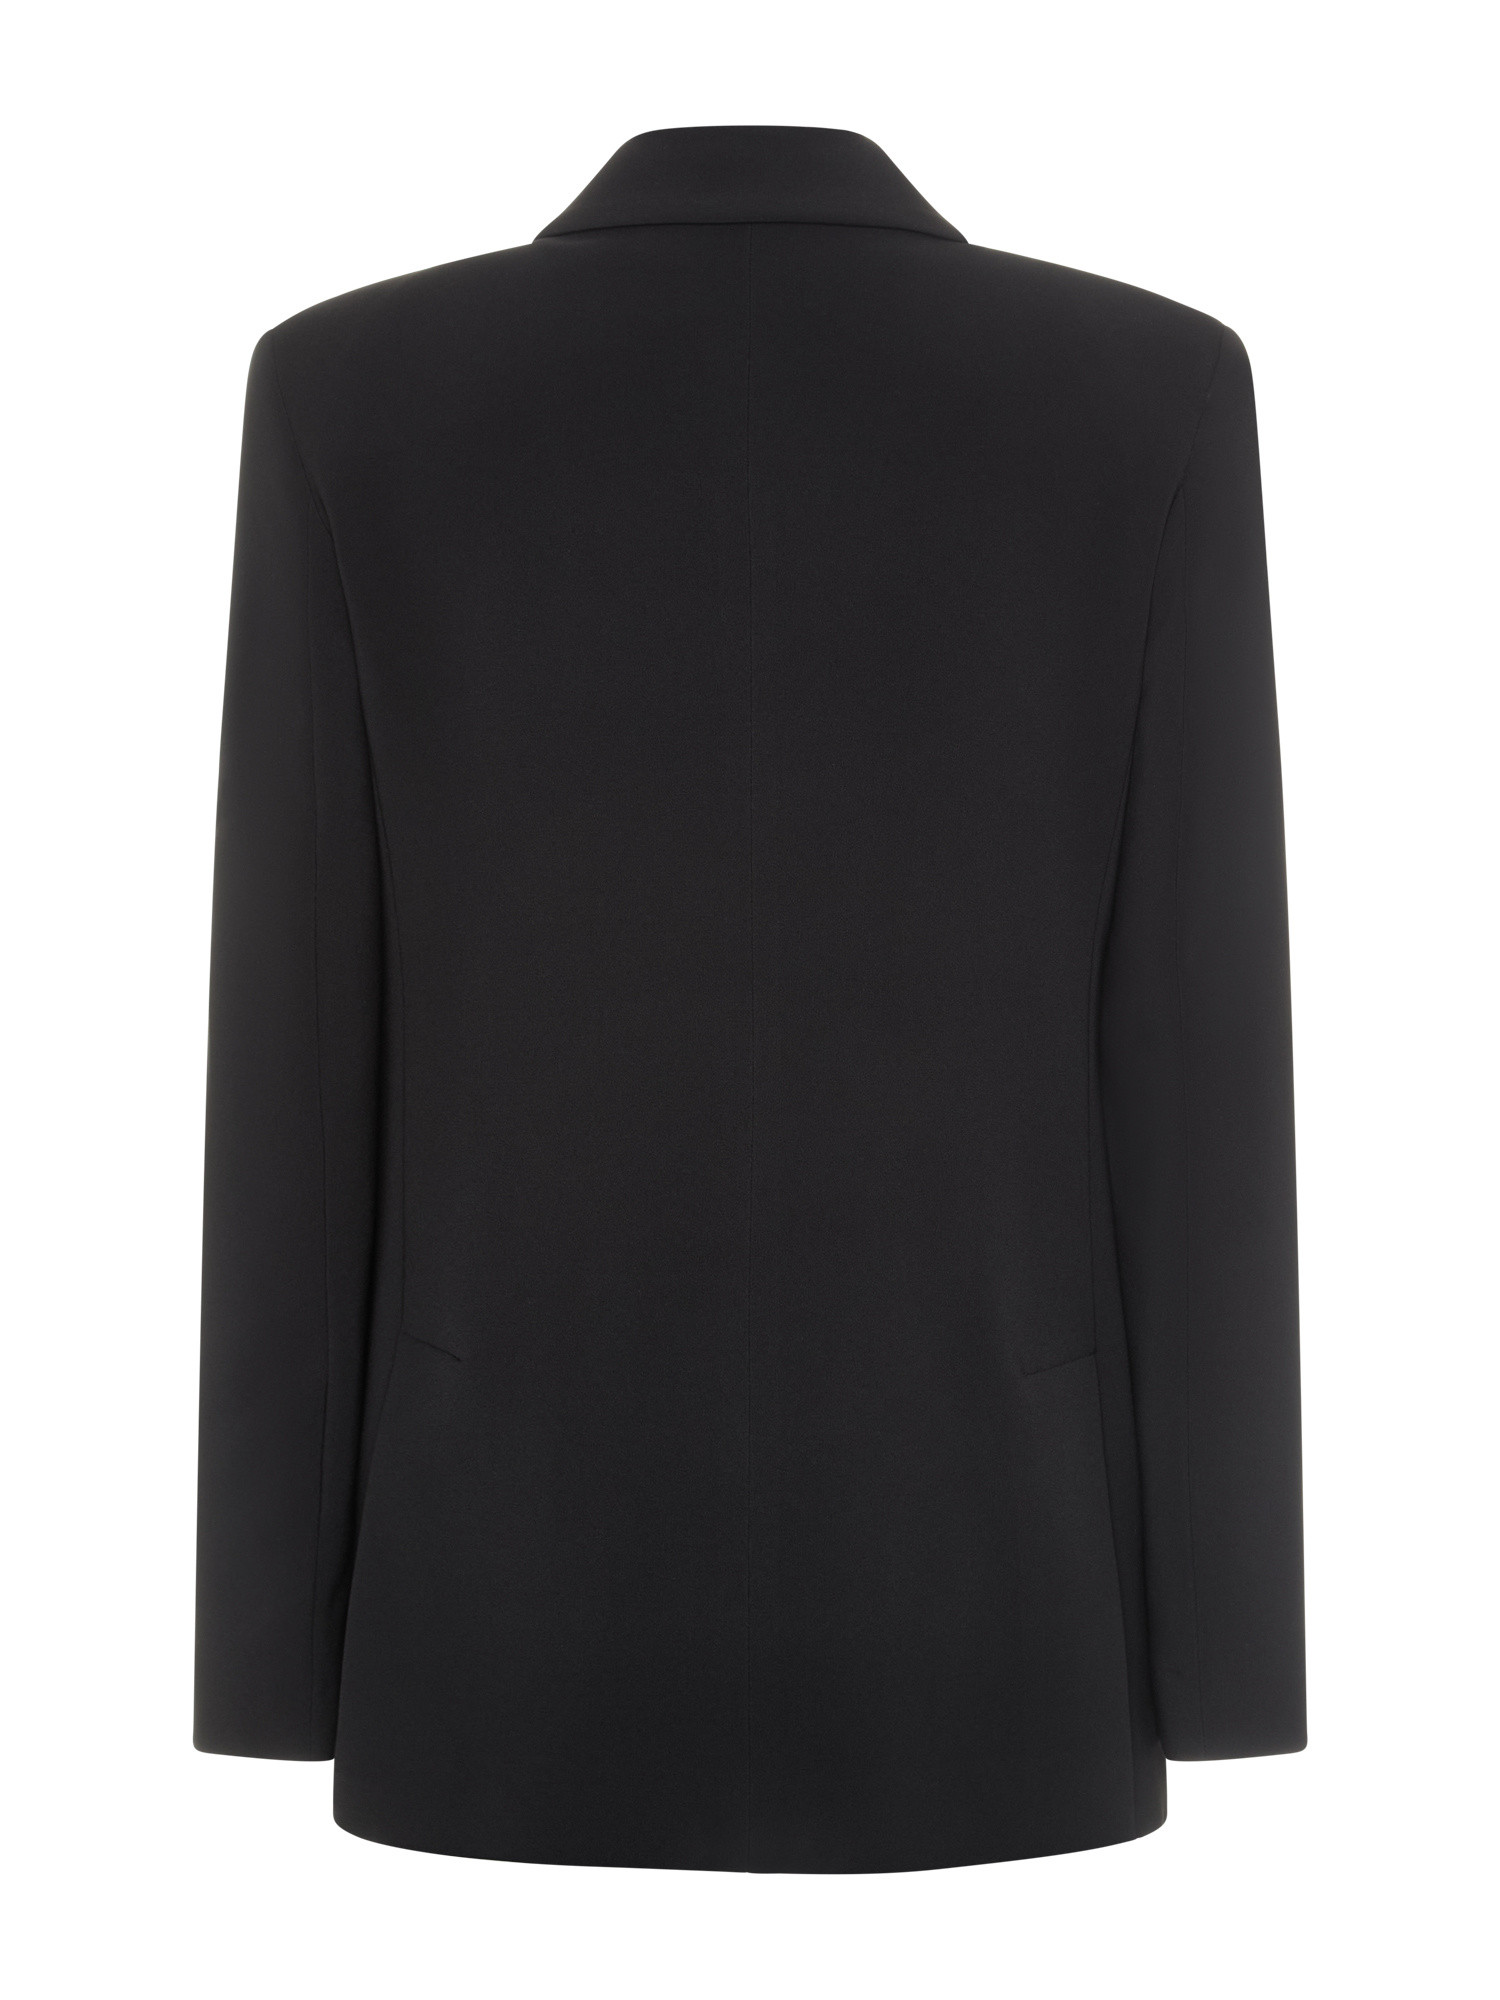 Koan - Double-breasted jacket, Black, large image number 1